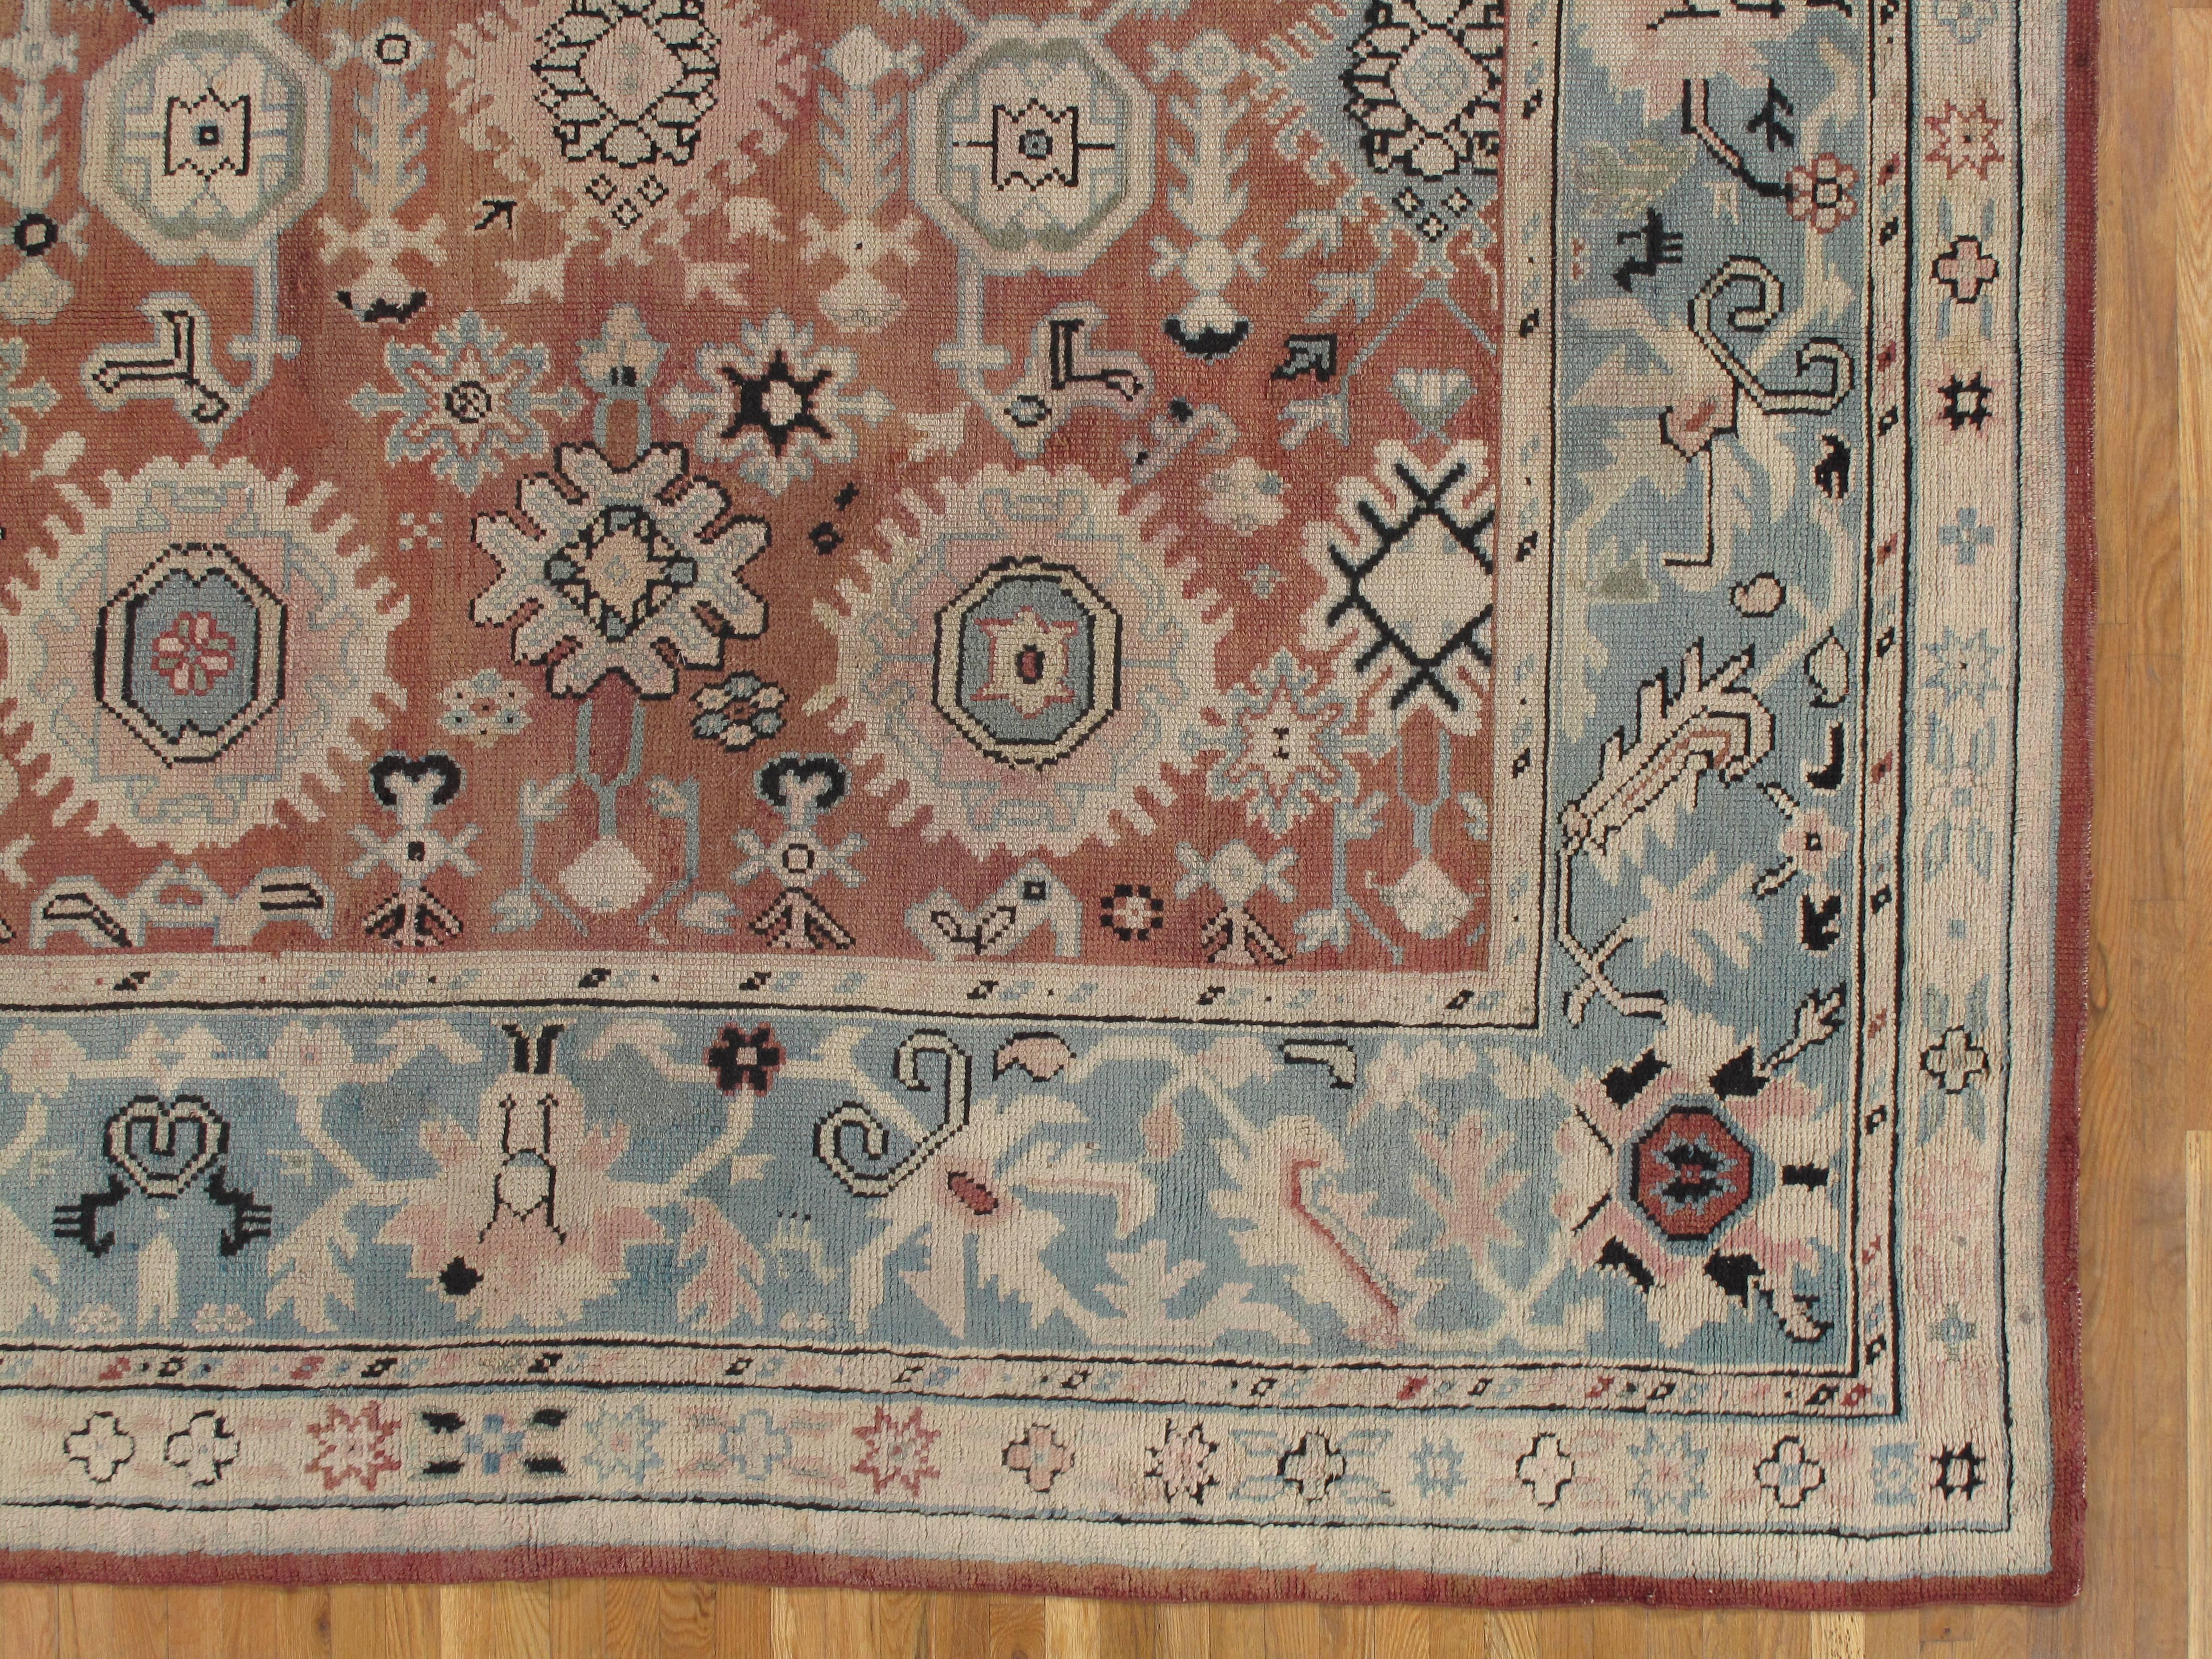 antique turkish carpets